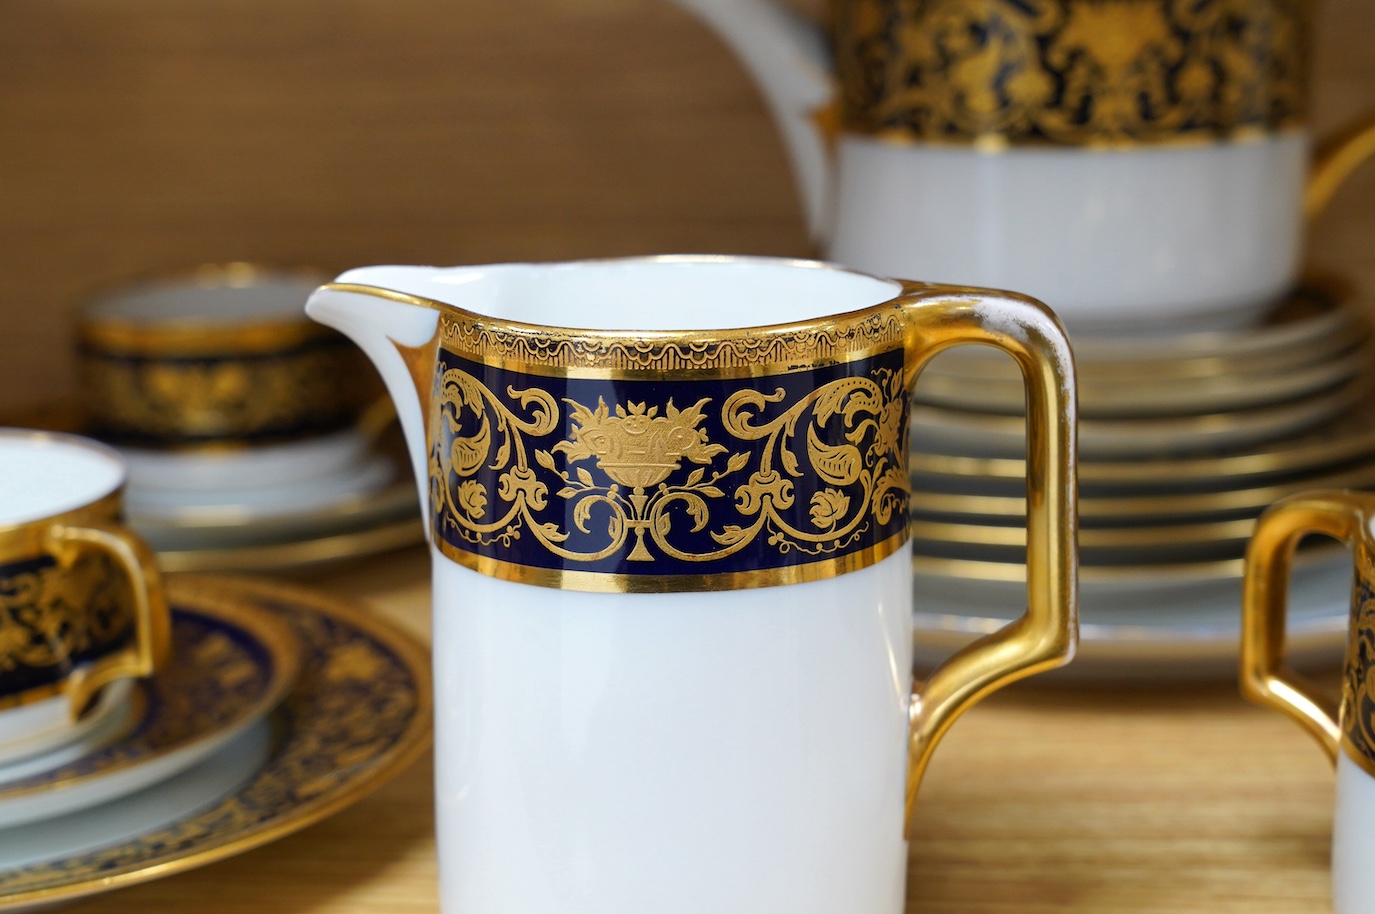 A Comte Harrach, Karlsbad, Bavarian rich dark blue and gilt banded part tea set, largest 32cm wide. Condition - fair to good